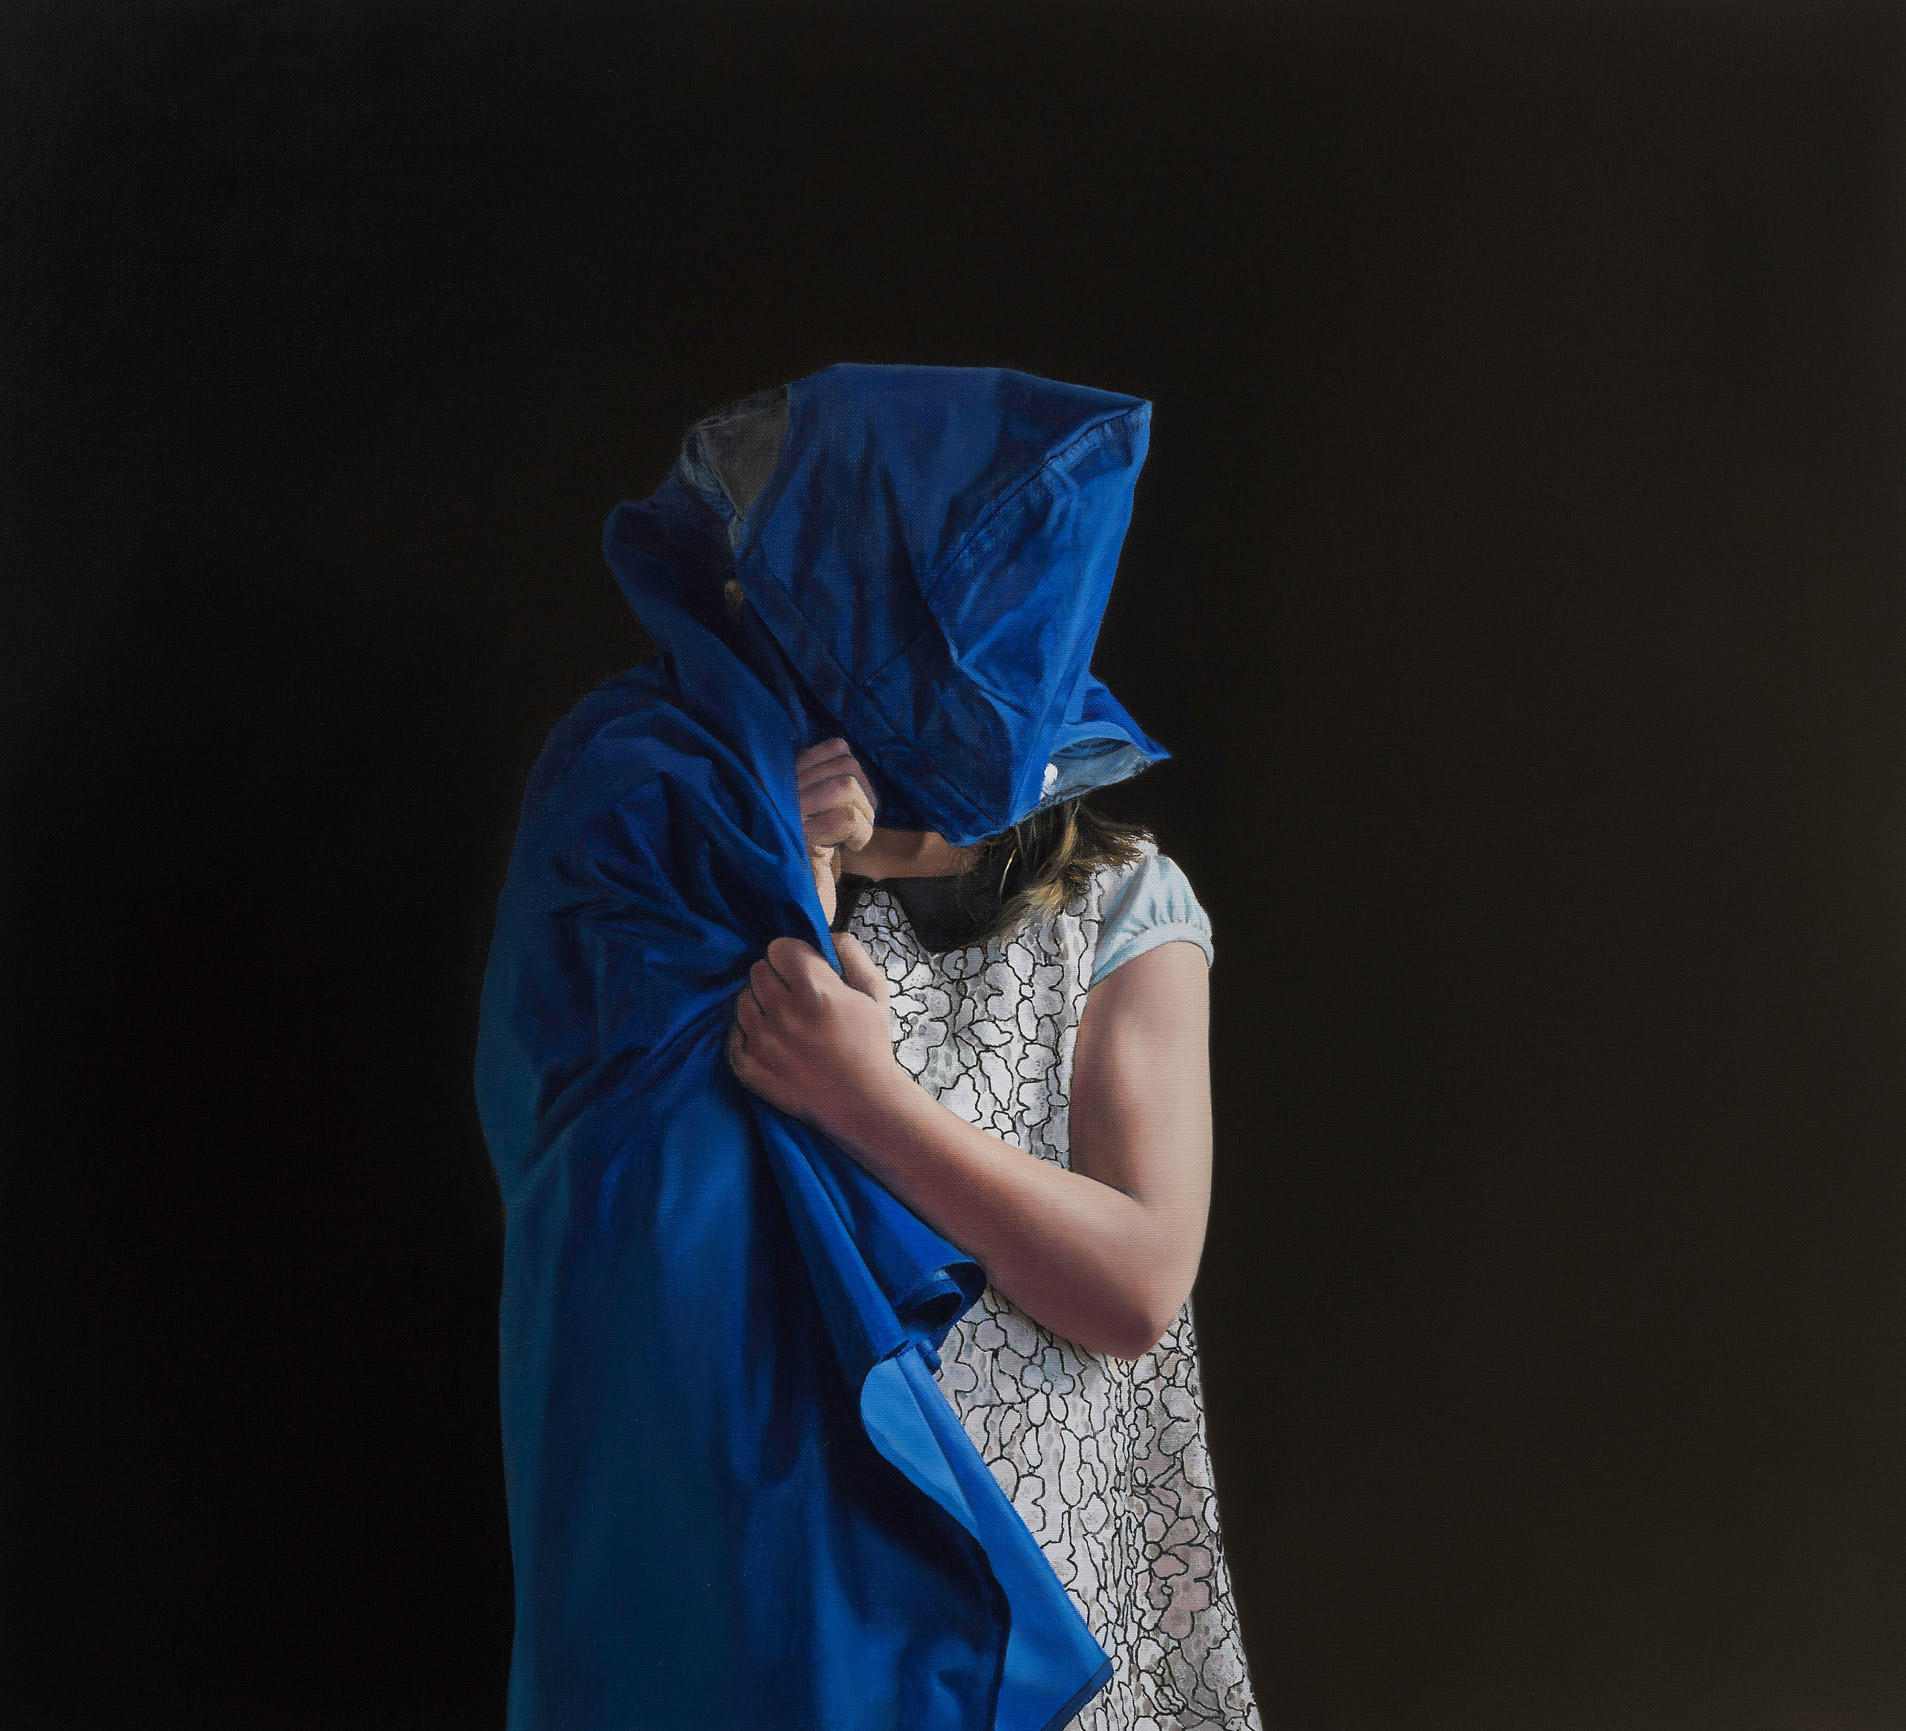 Die Blaue | 2017 | Öl auf Leinwand 75 x 83 cm